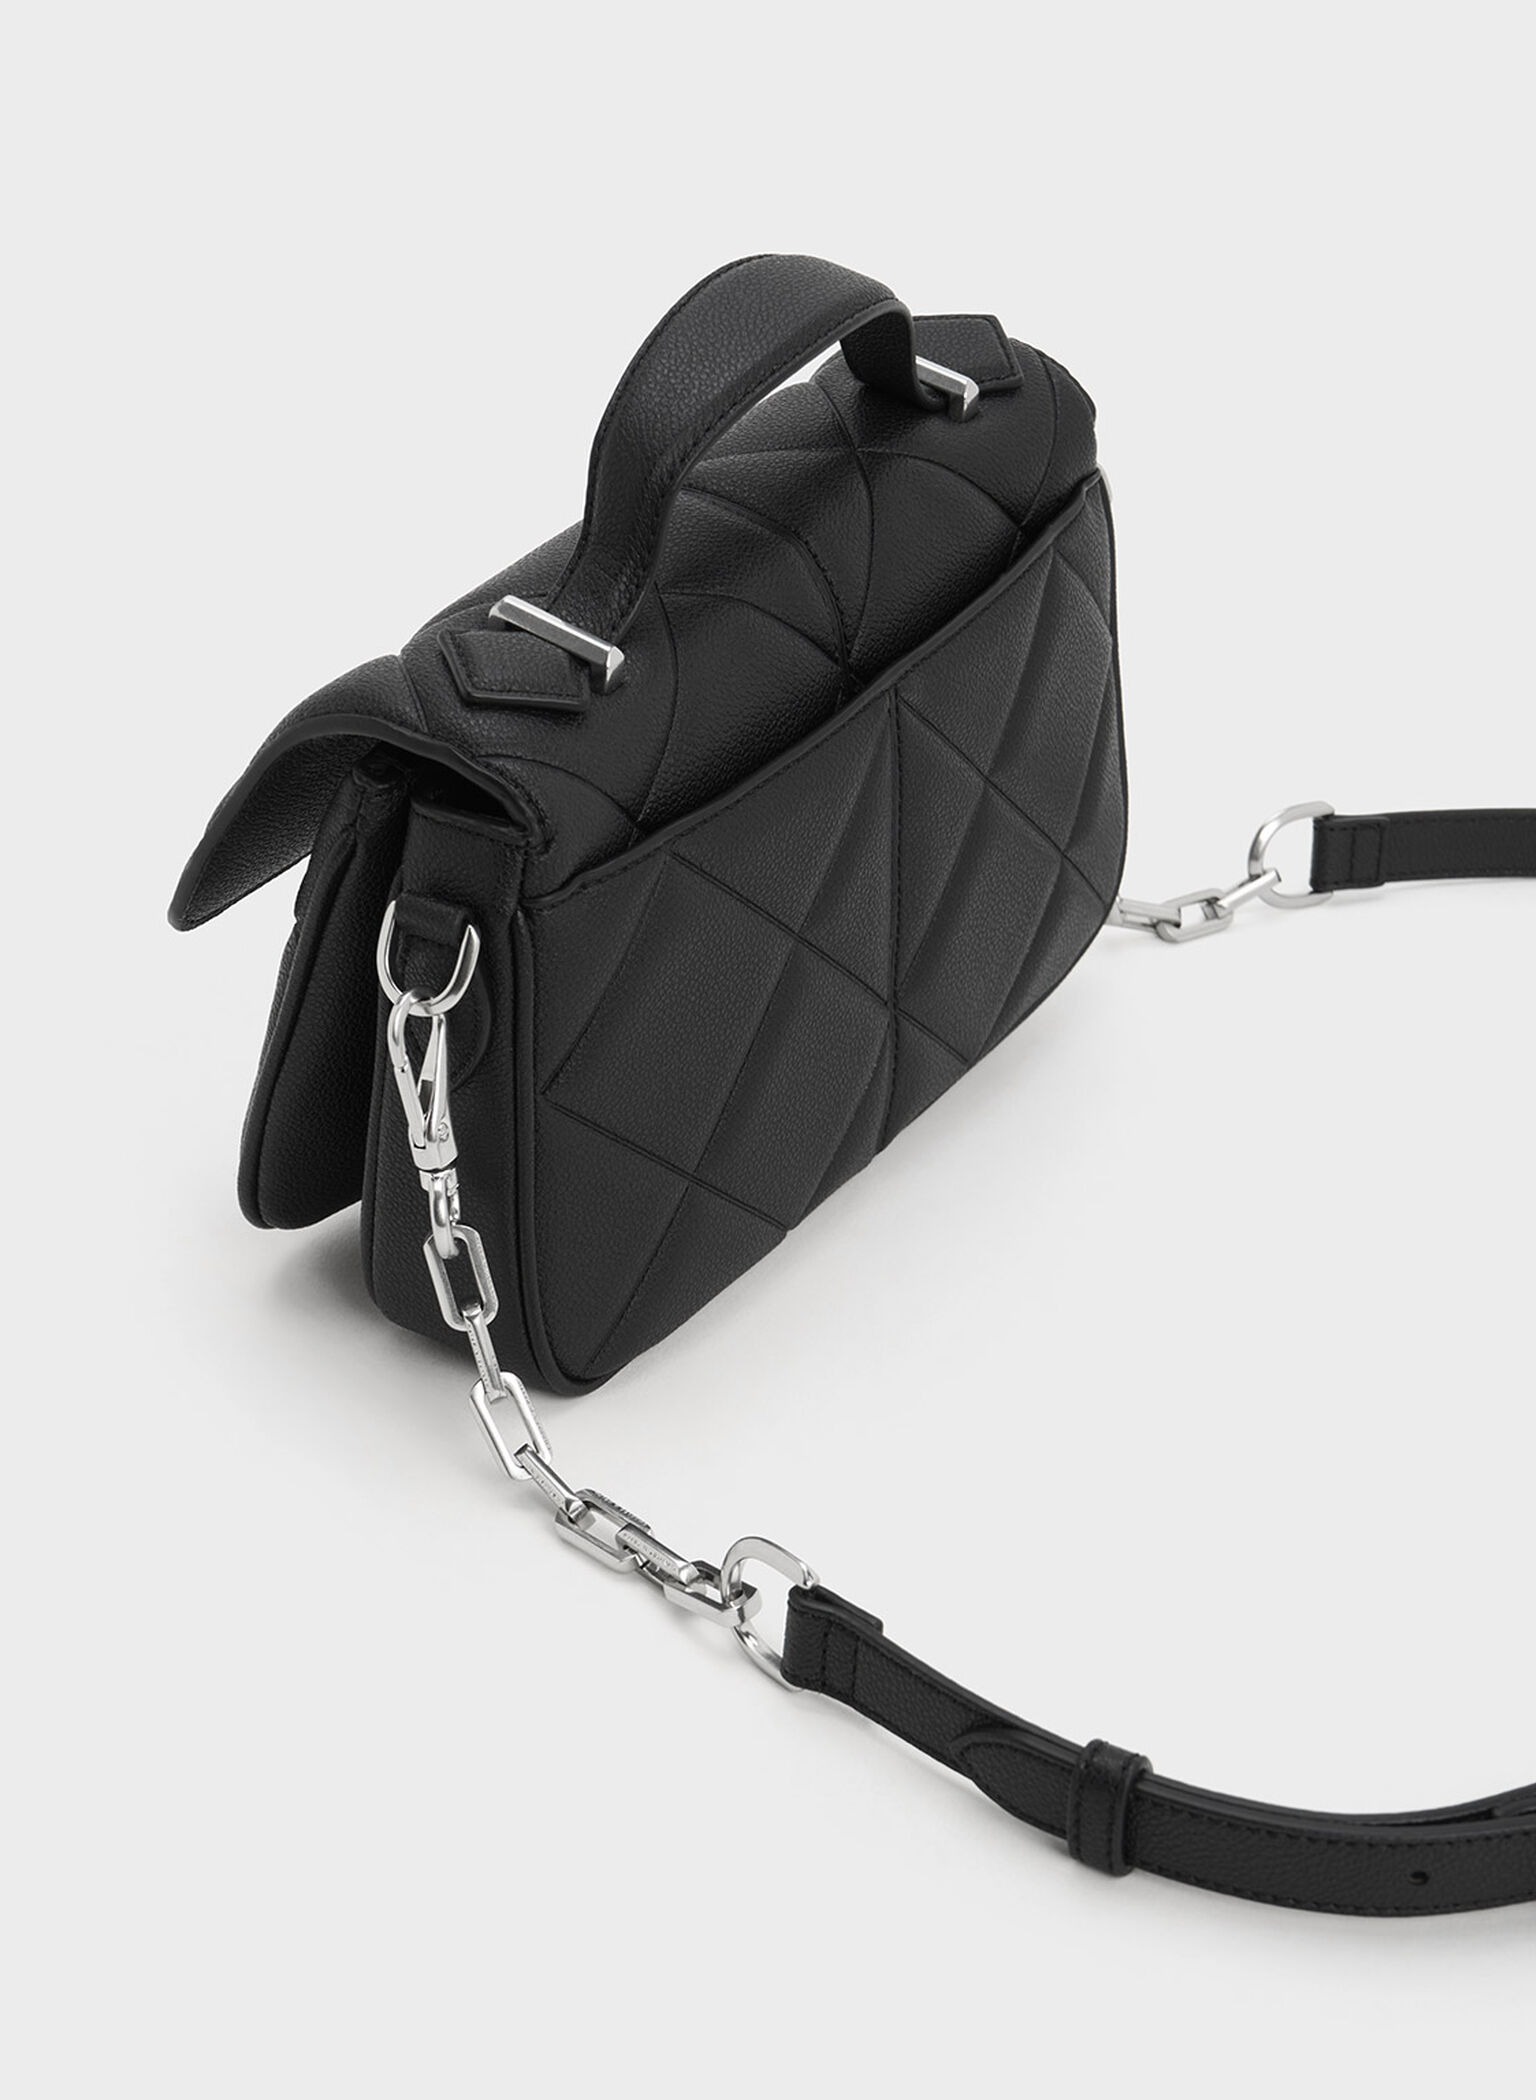 Anwen Quilted Top Handle Bag, Noir, hi-res